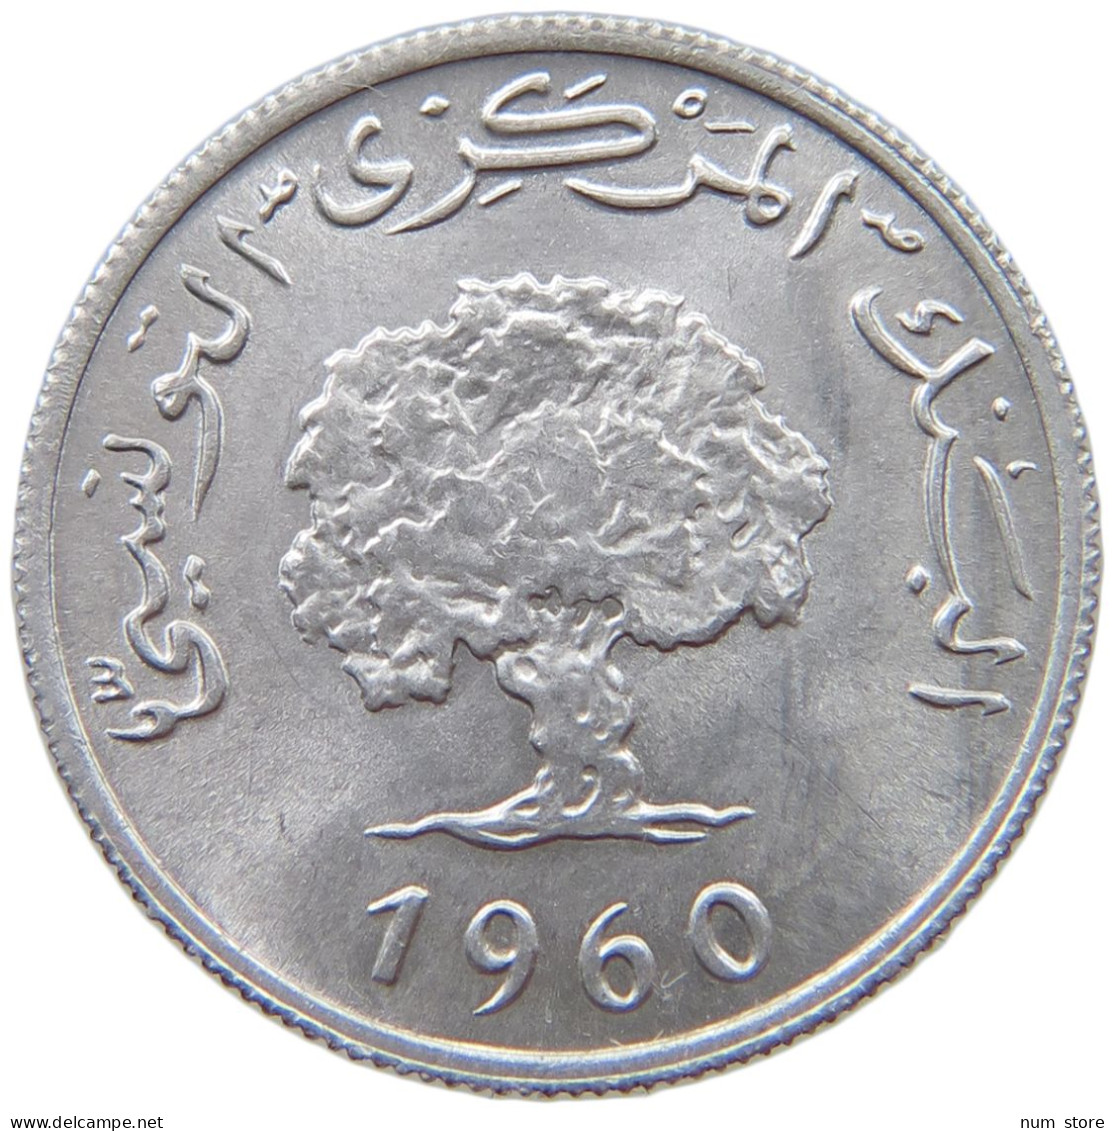 TUNISIA 2 MILLIEMES 1960  #a021 0727 - Tunisie